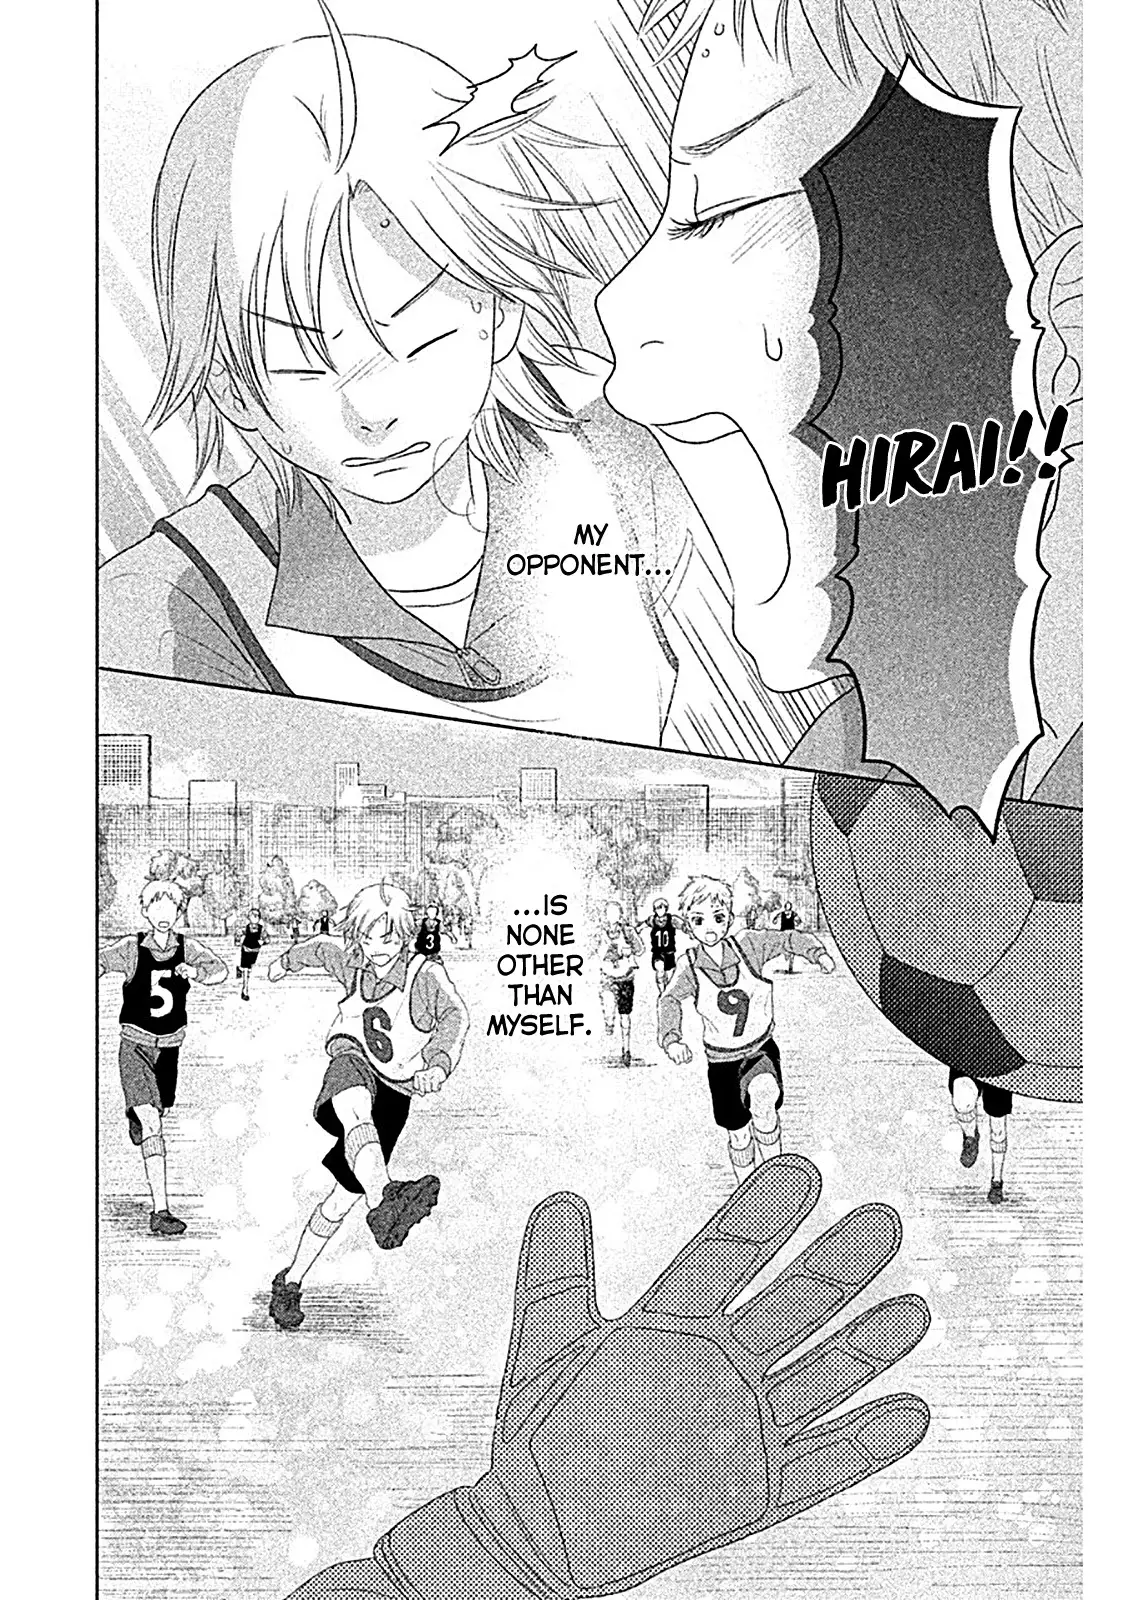 Chihayafuru: Middle School Arc - 4 page 23